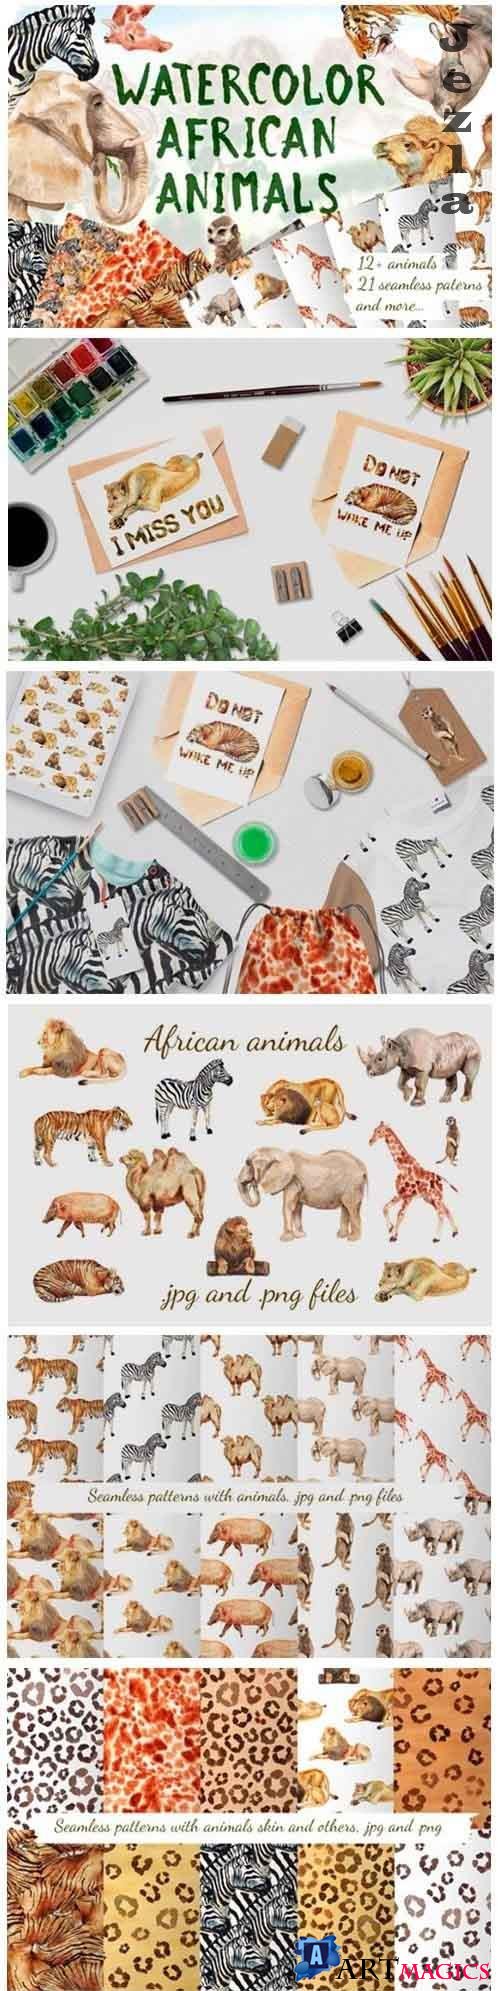 Watercolor african animals - 770424